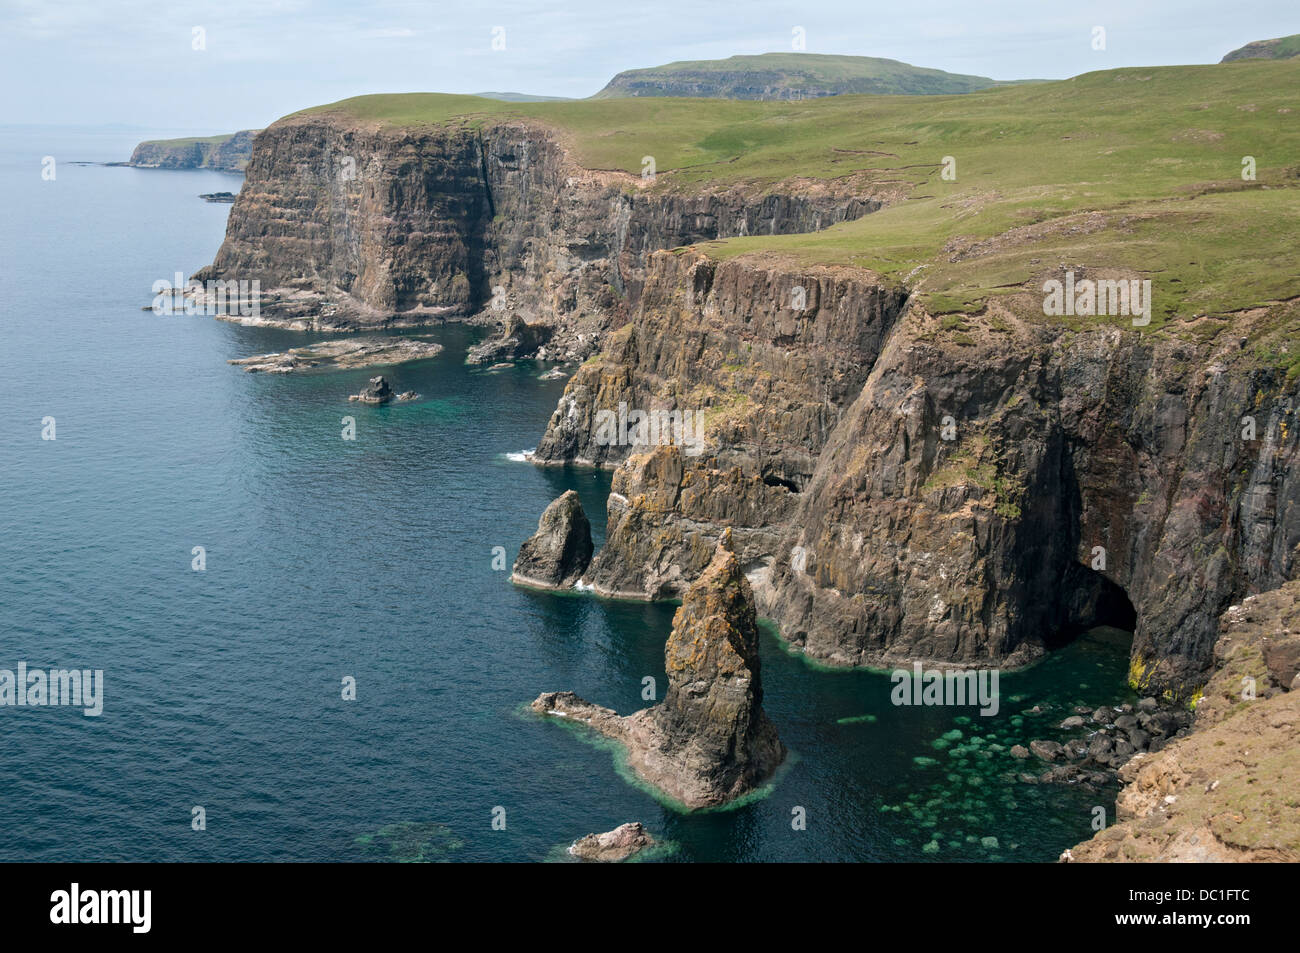 Sea stacks and cliff scenery on the Duirinish coast, Isle of Skye, Scotland, UK Stock Photo